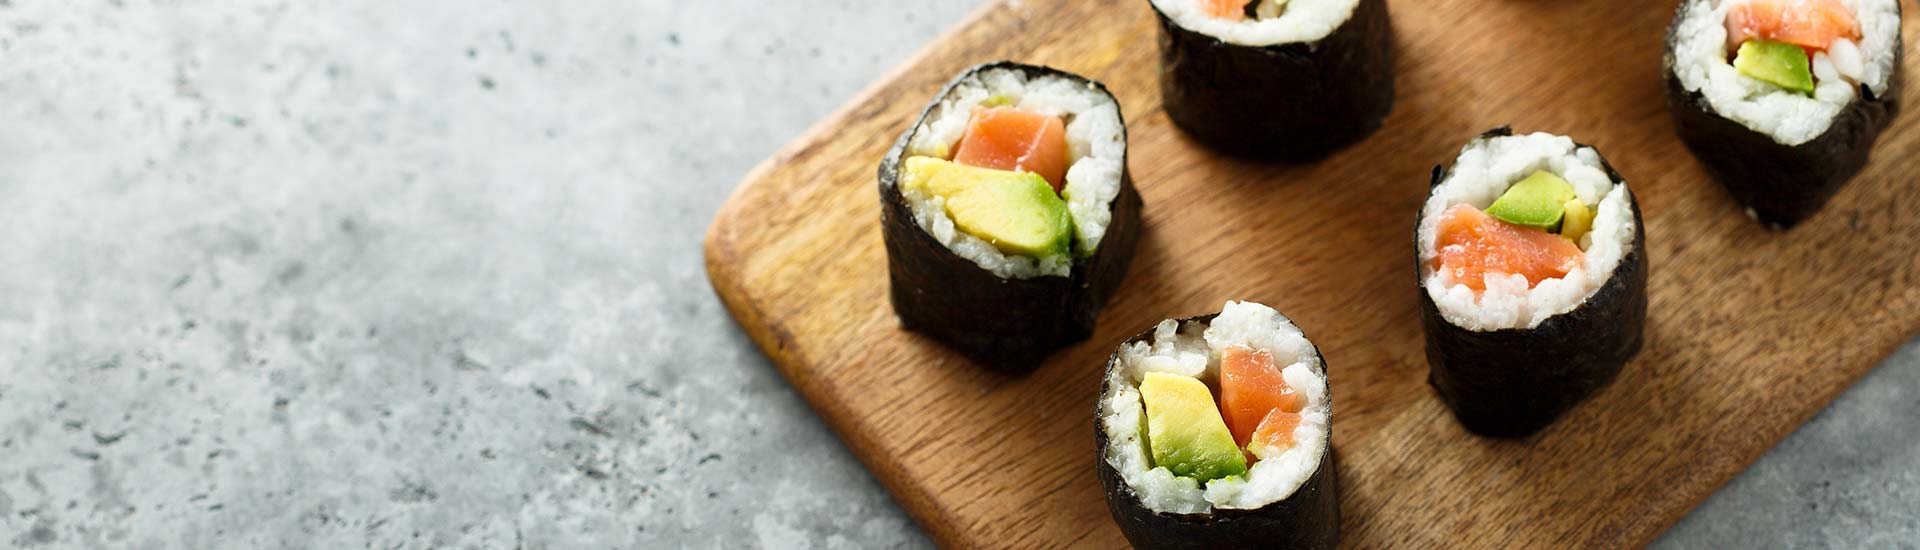 DY Sushi Roll 